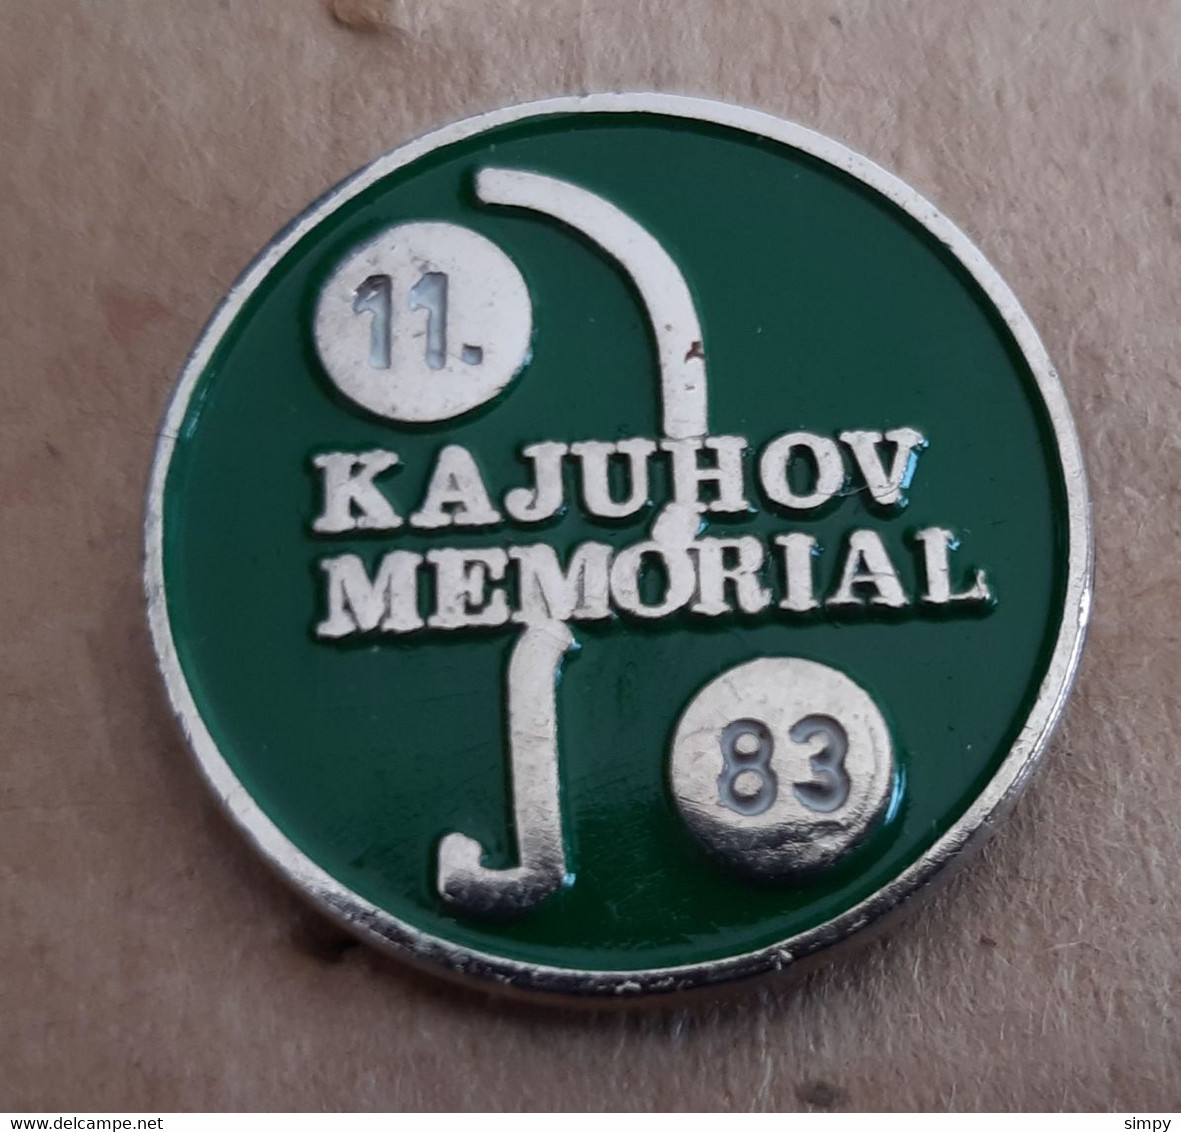 Table Tennis Tournament 11. Kajuhov Memorial  1983 Slovenia Pin Badge - Tischtennis